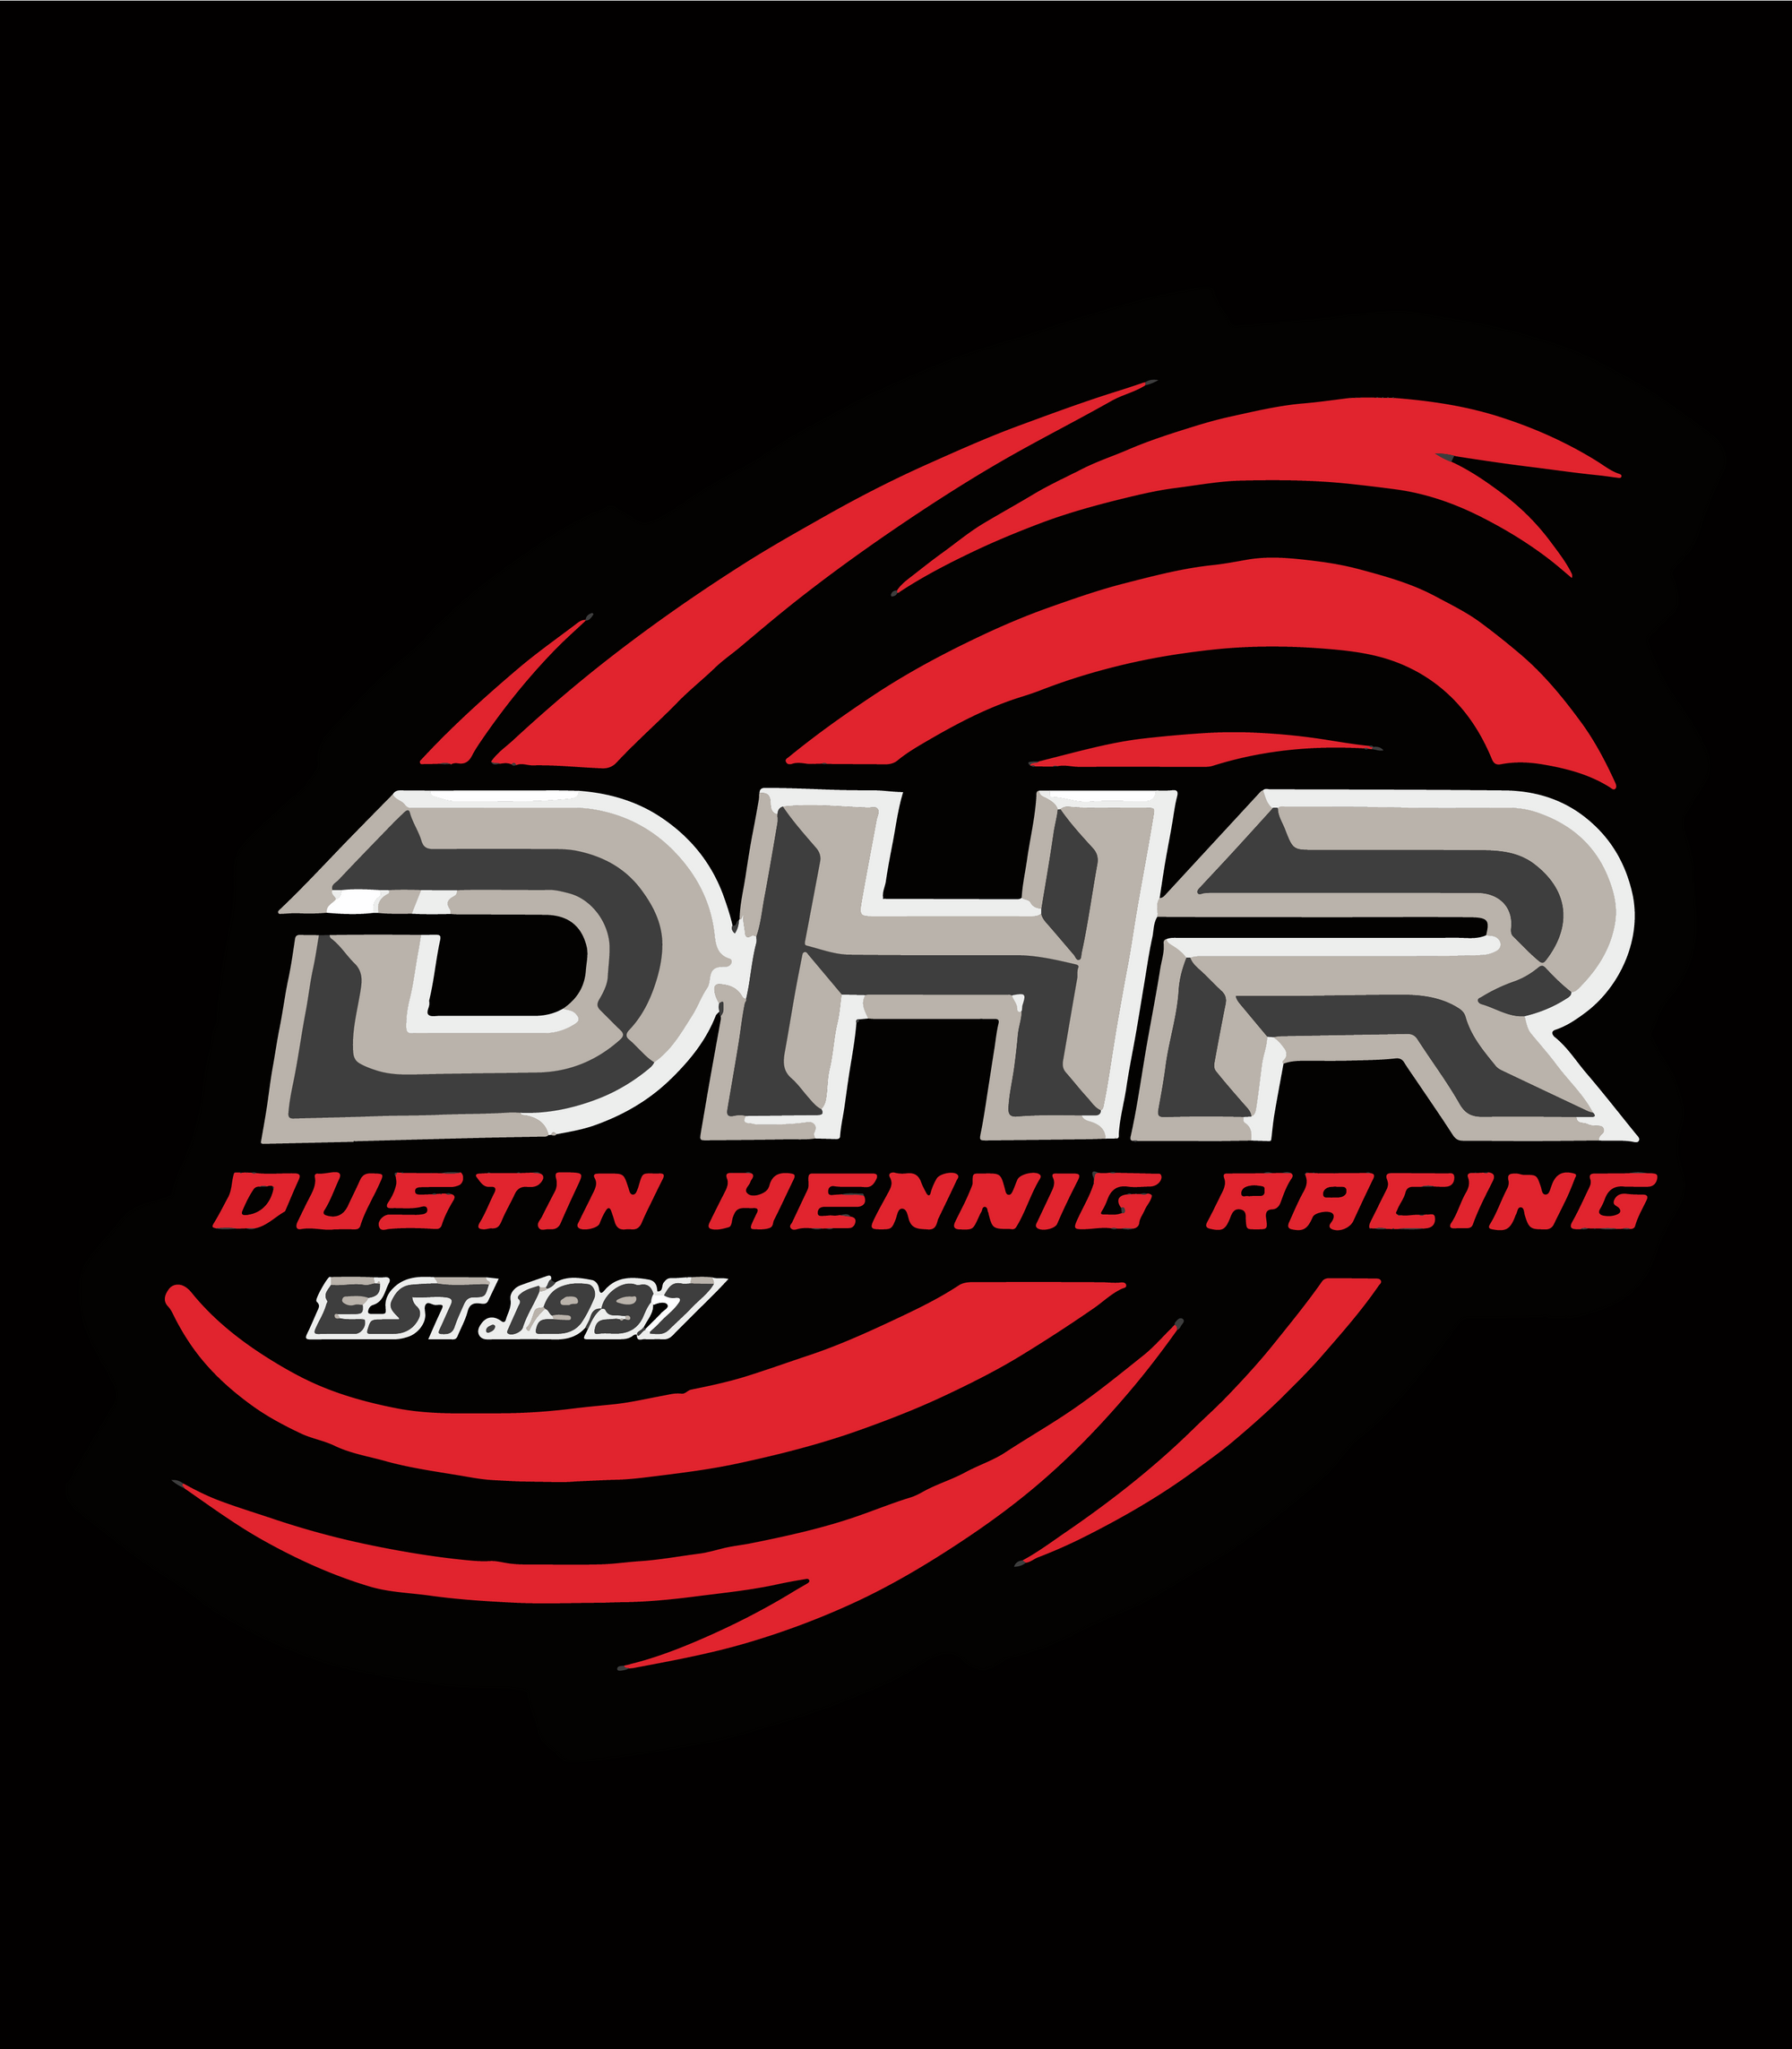 Dustin Hennig Racing